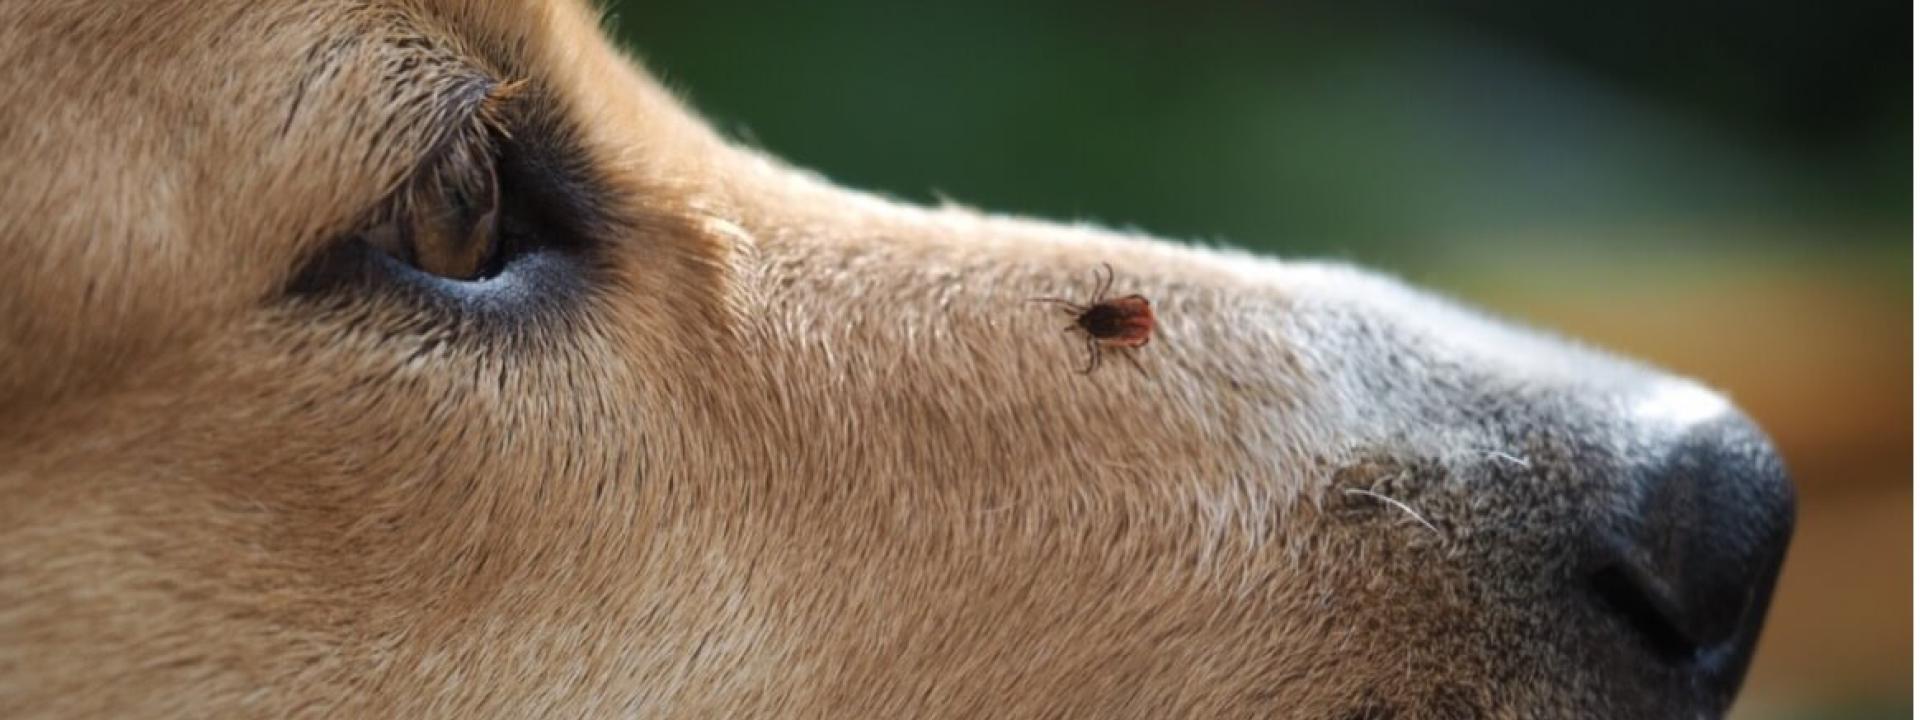 A close up of a dog's face, tick